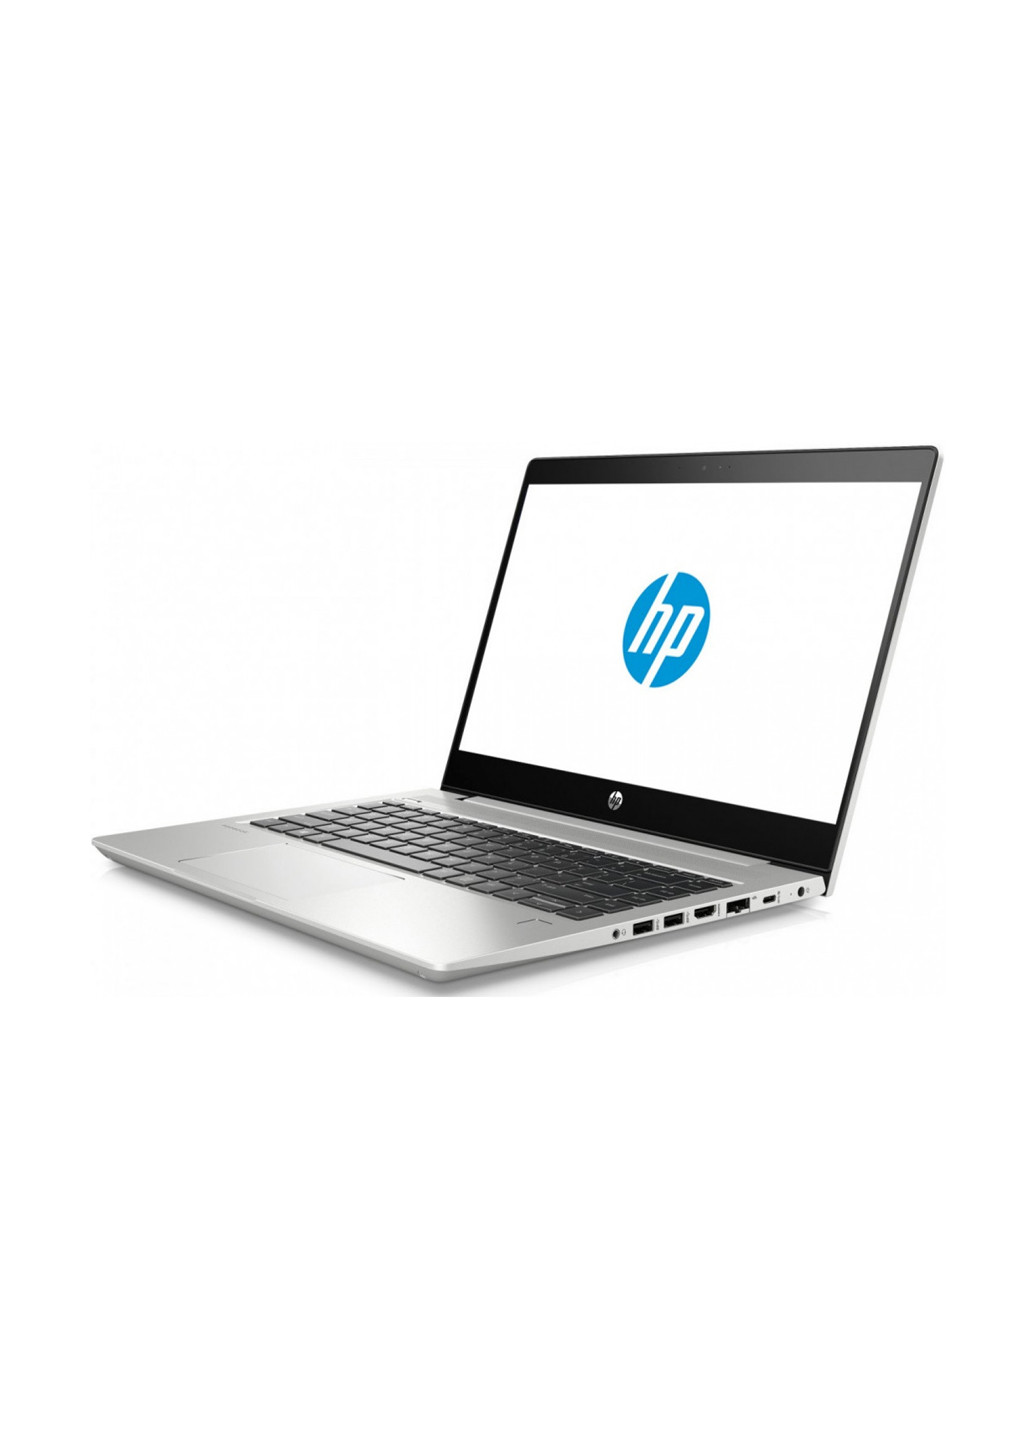 Ноутбук HP probook 440 g6 (4rz53av_v15) silver (173921826)